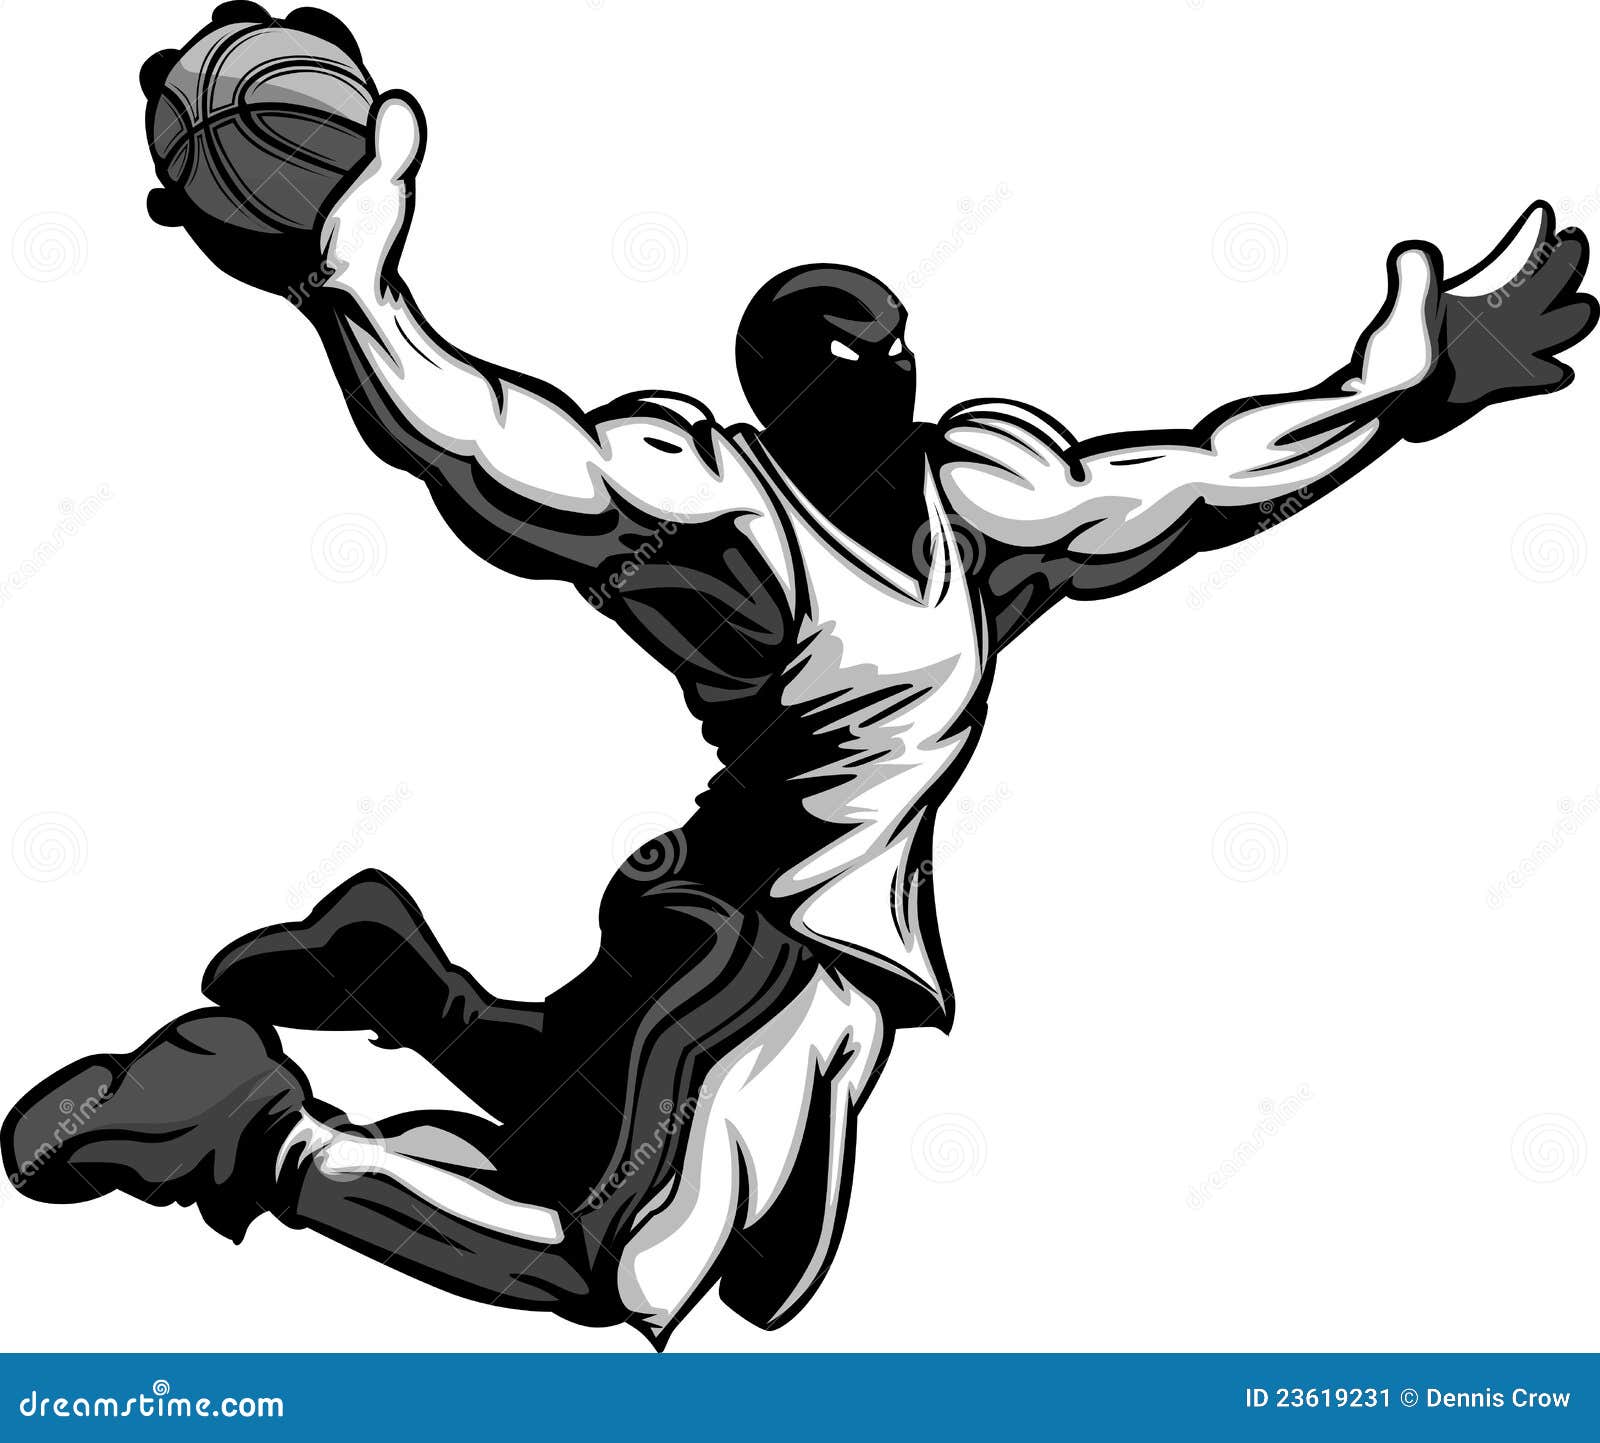 Basketball Player Cartoon Dunking Basketball Stock Image - Image: 23619231